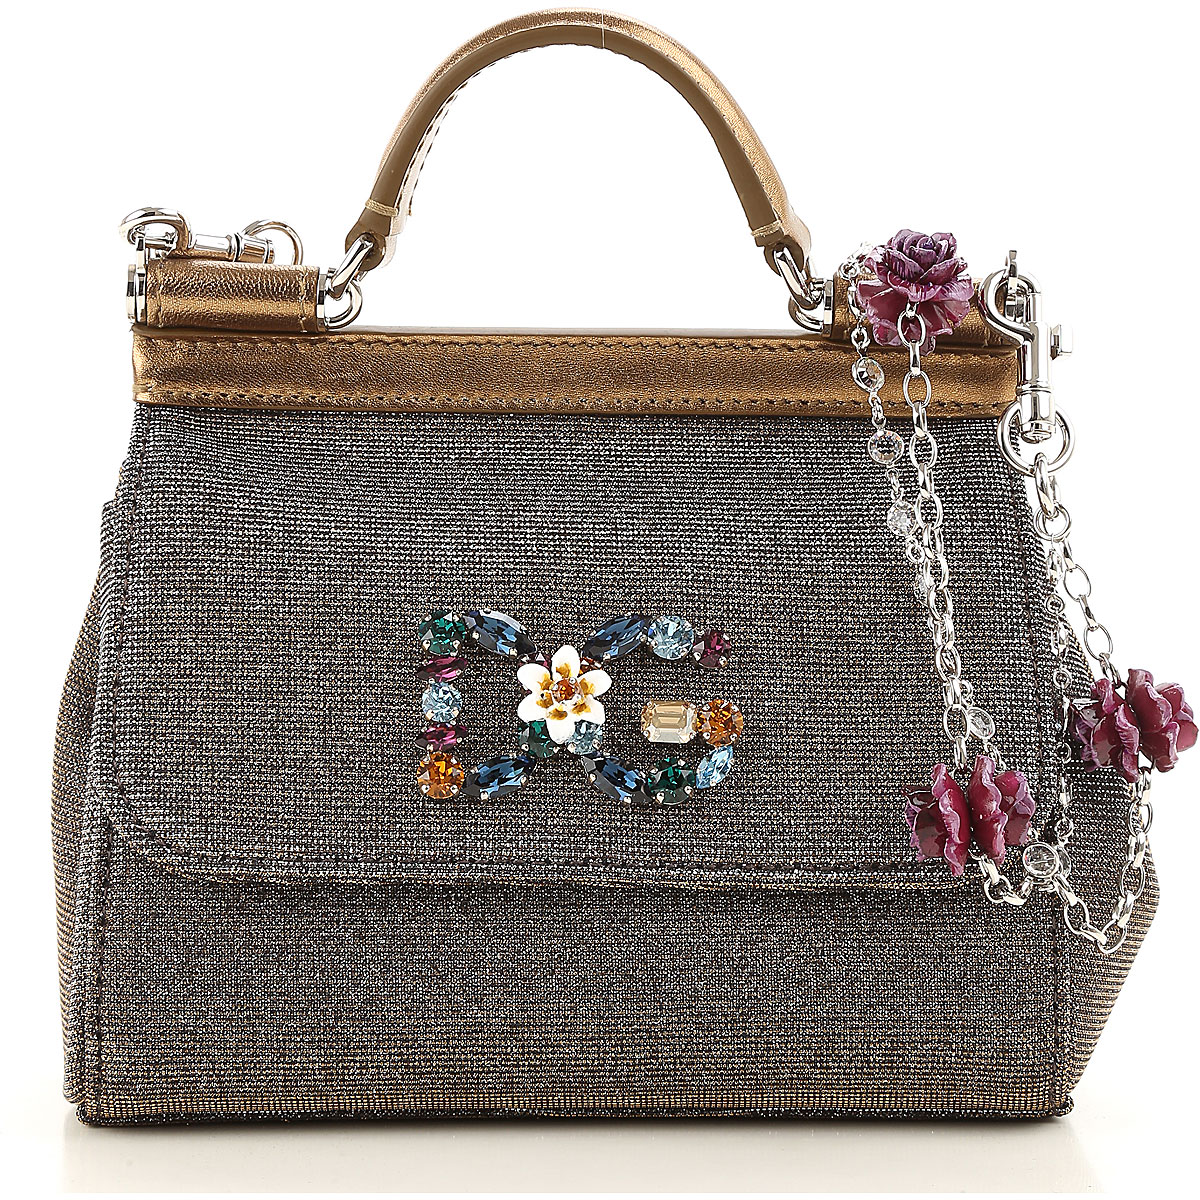 Handbags Dolce & Gabbana, Style code: bb6387-ah913-87626